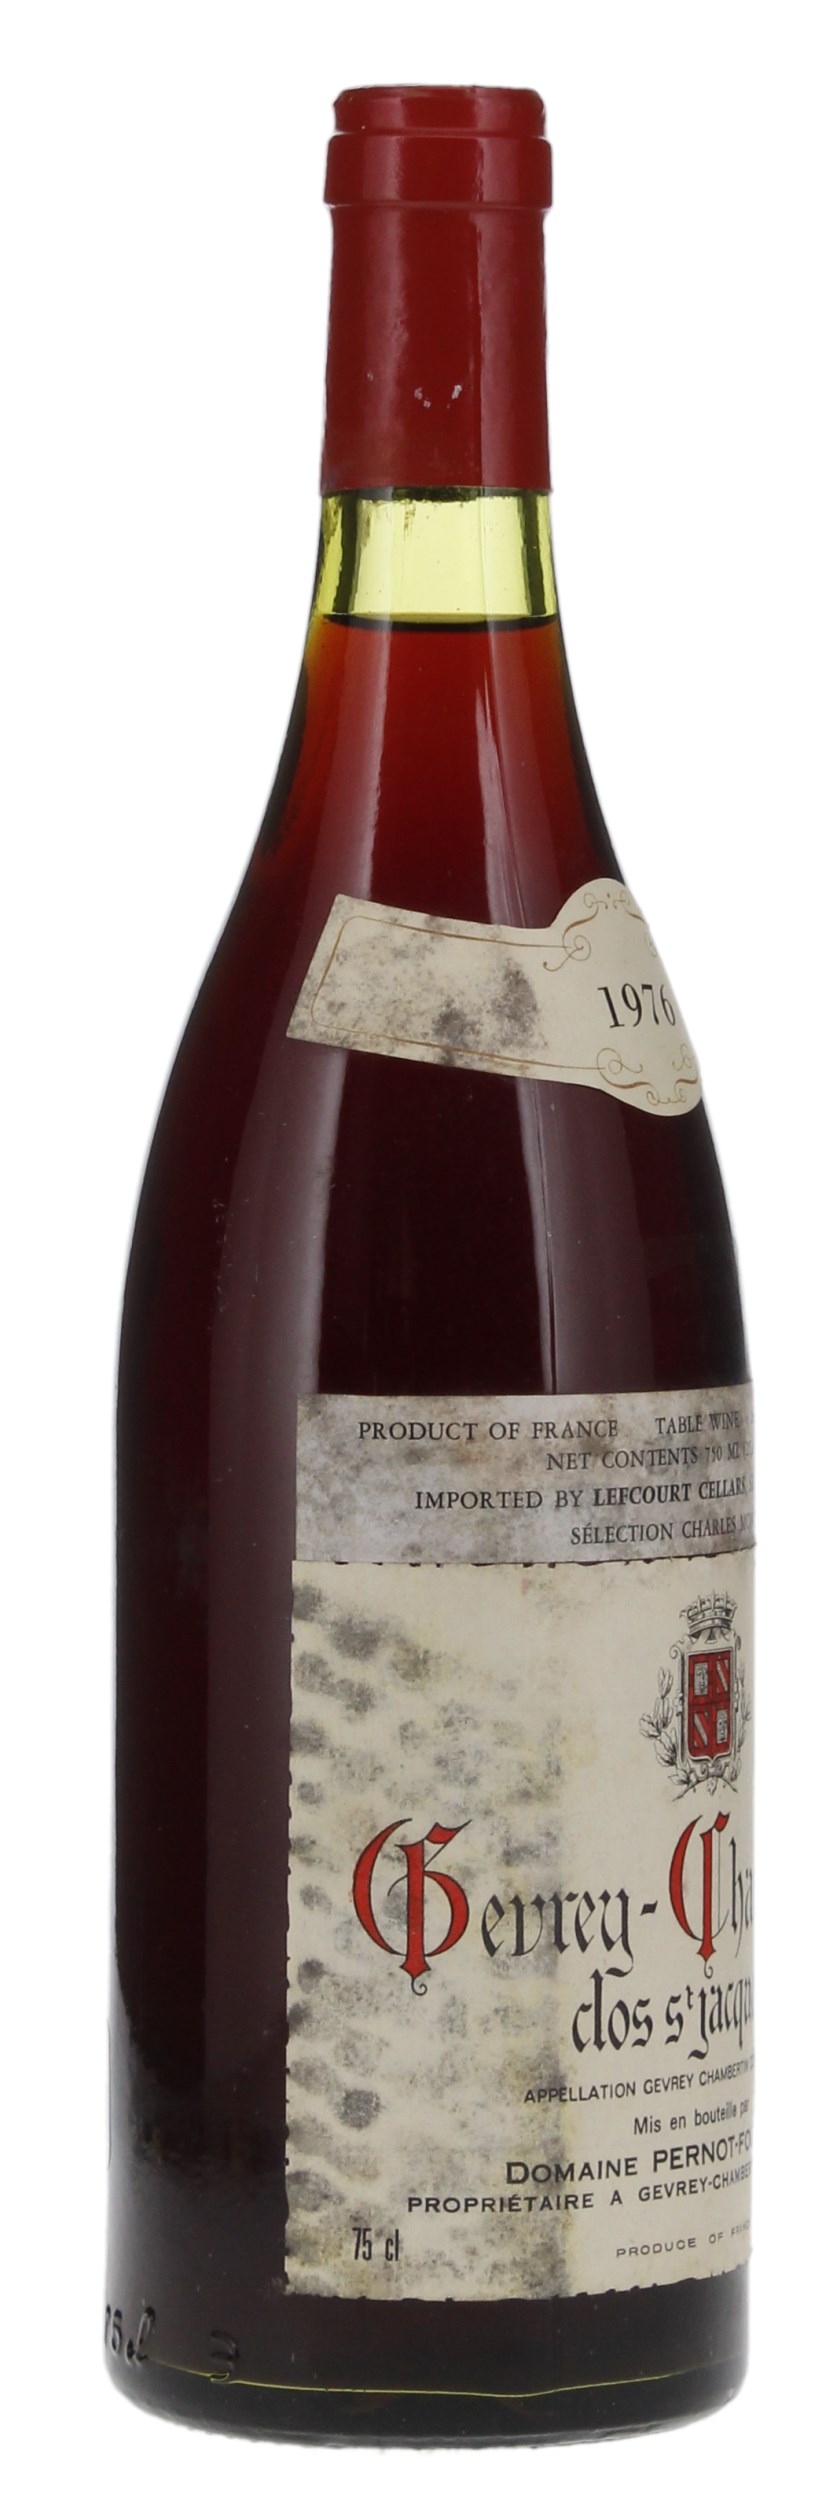 1976 Pernot-Fourrier Gevrey-Chambertin Clos St. Jacques, 750ml